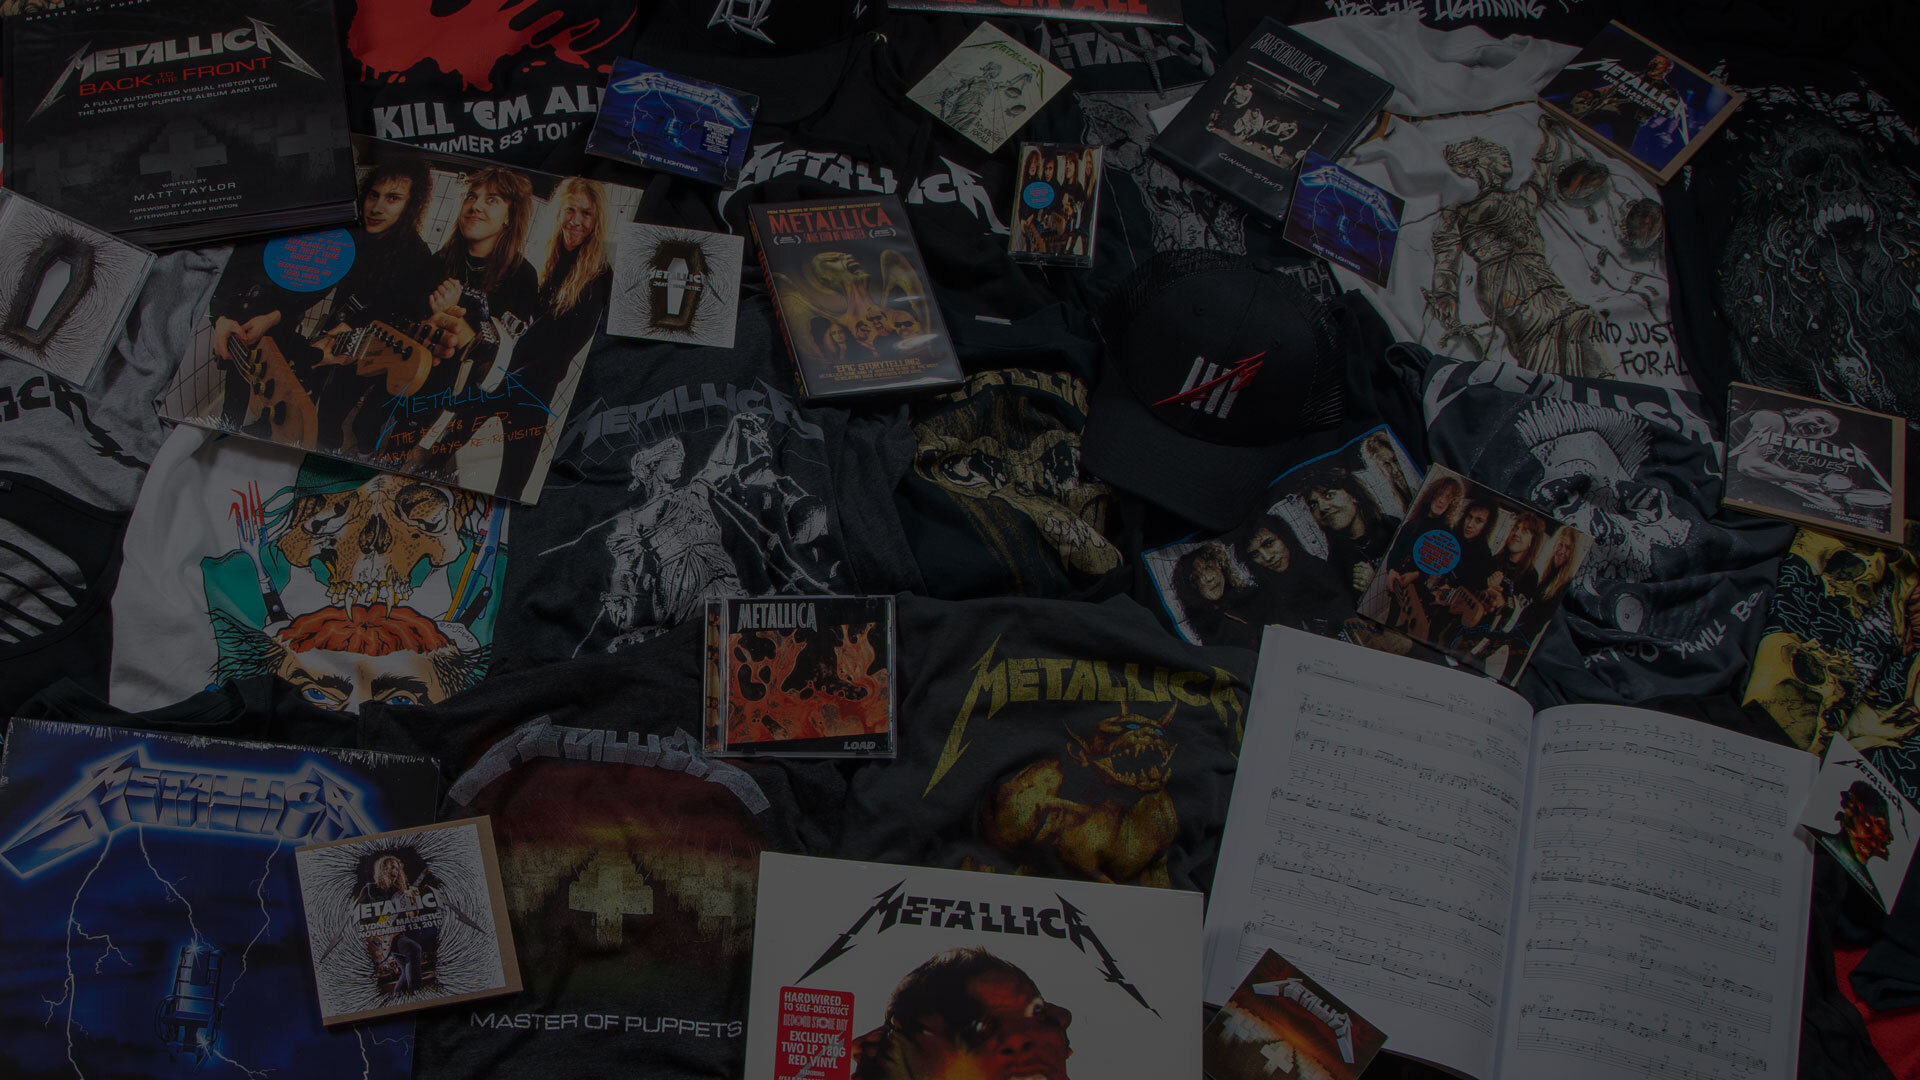 Live Metallica CDs